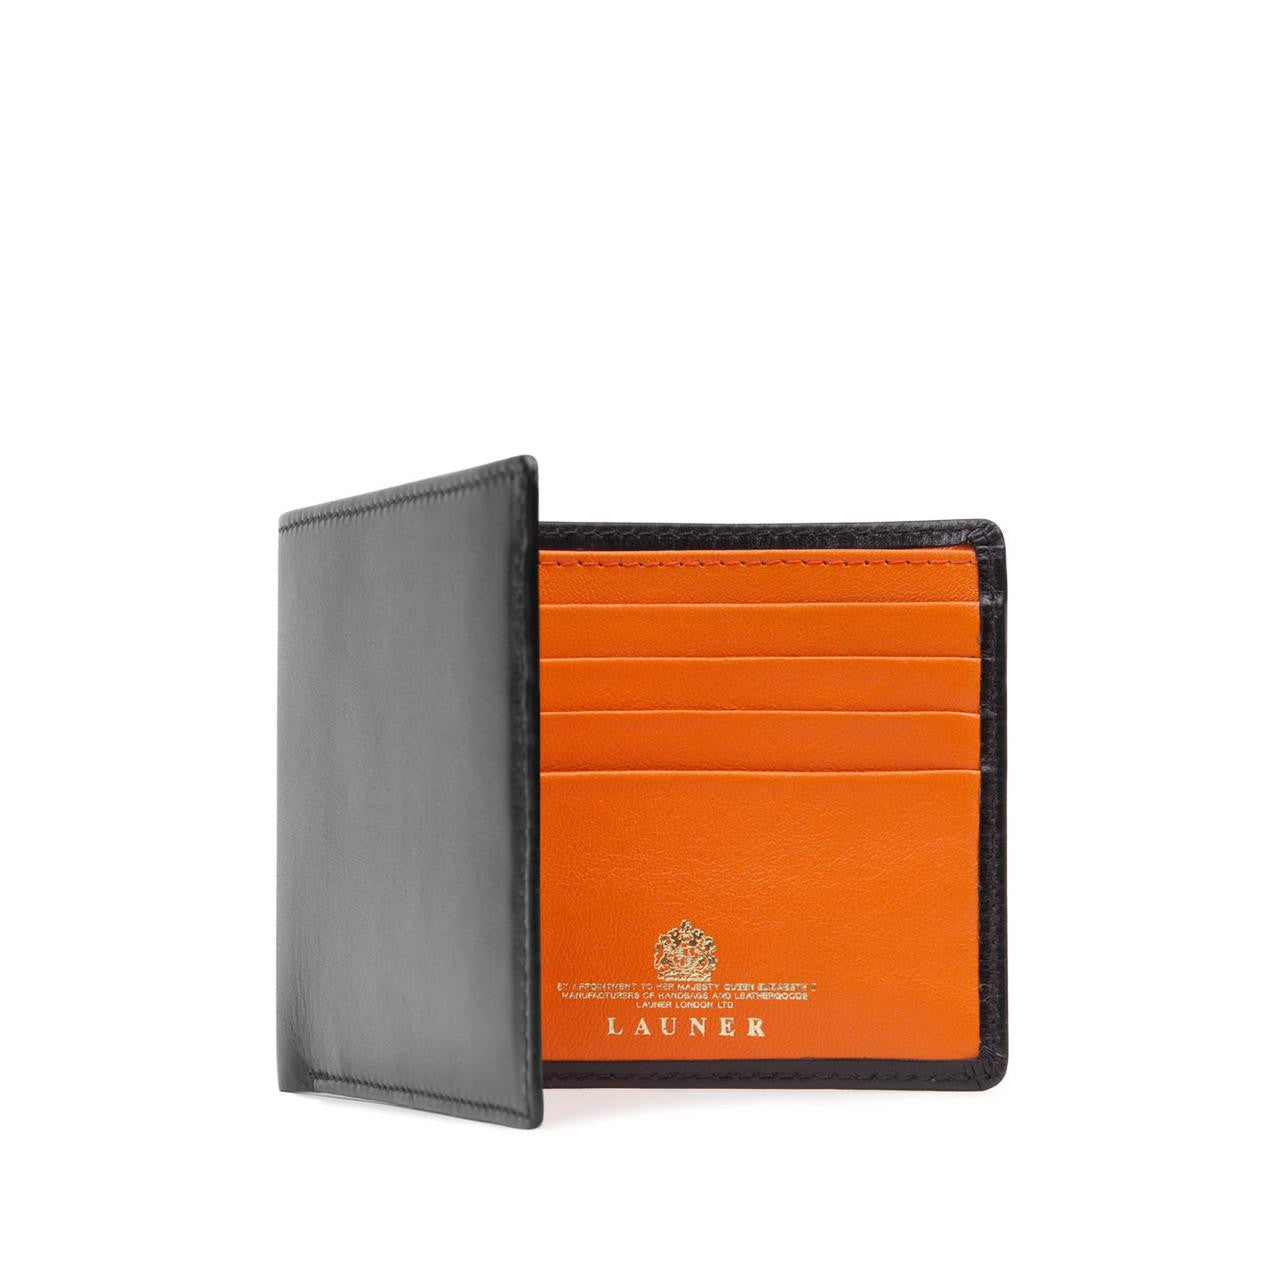 Launer Eight Credit Card Wallet, Black/Orange